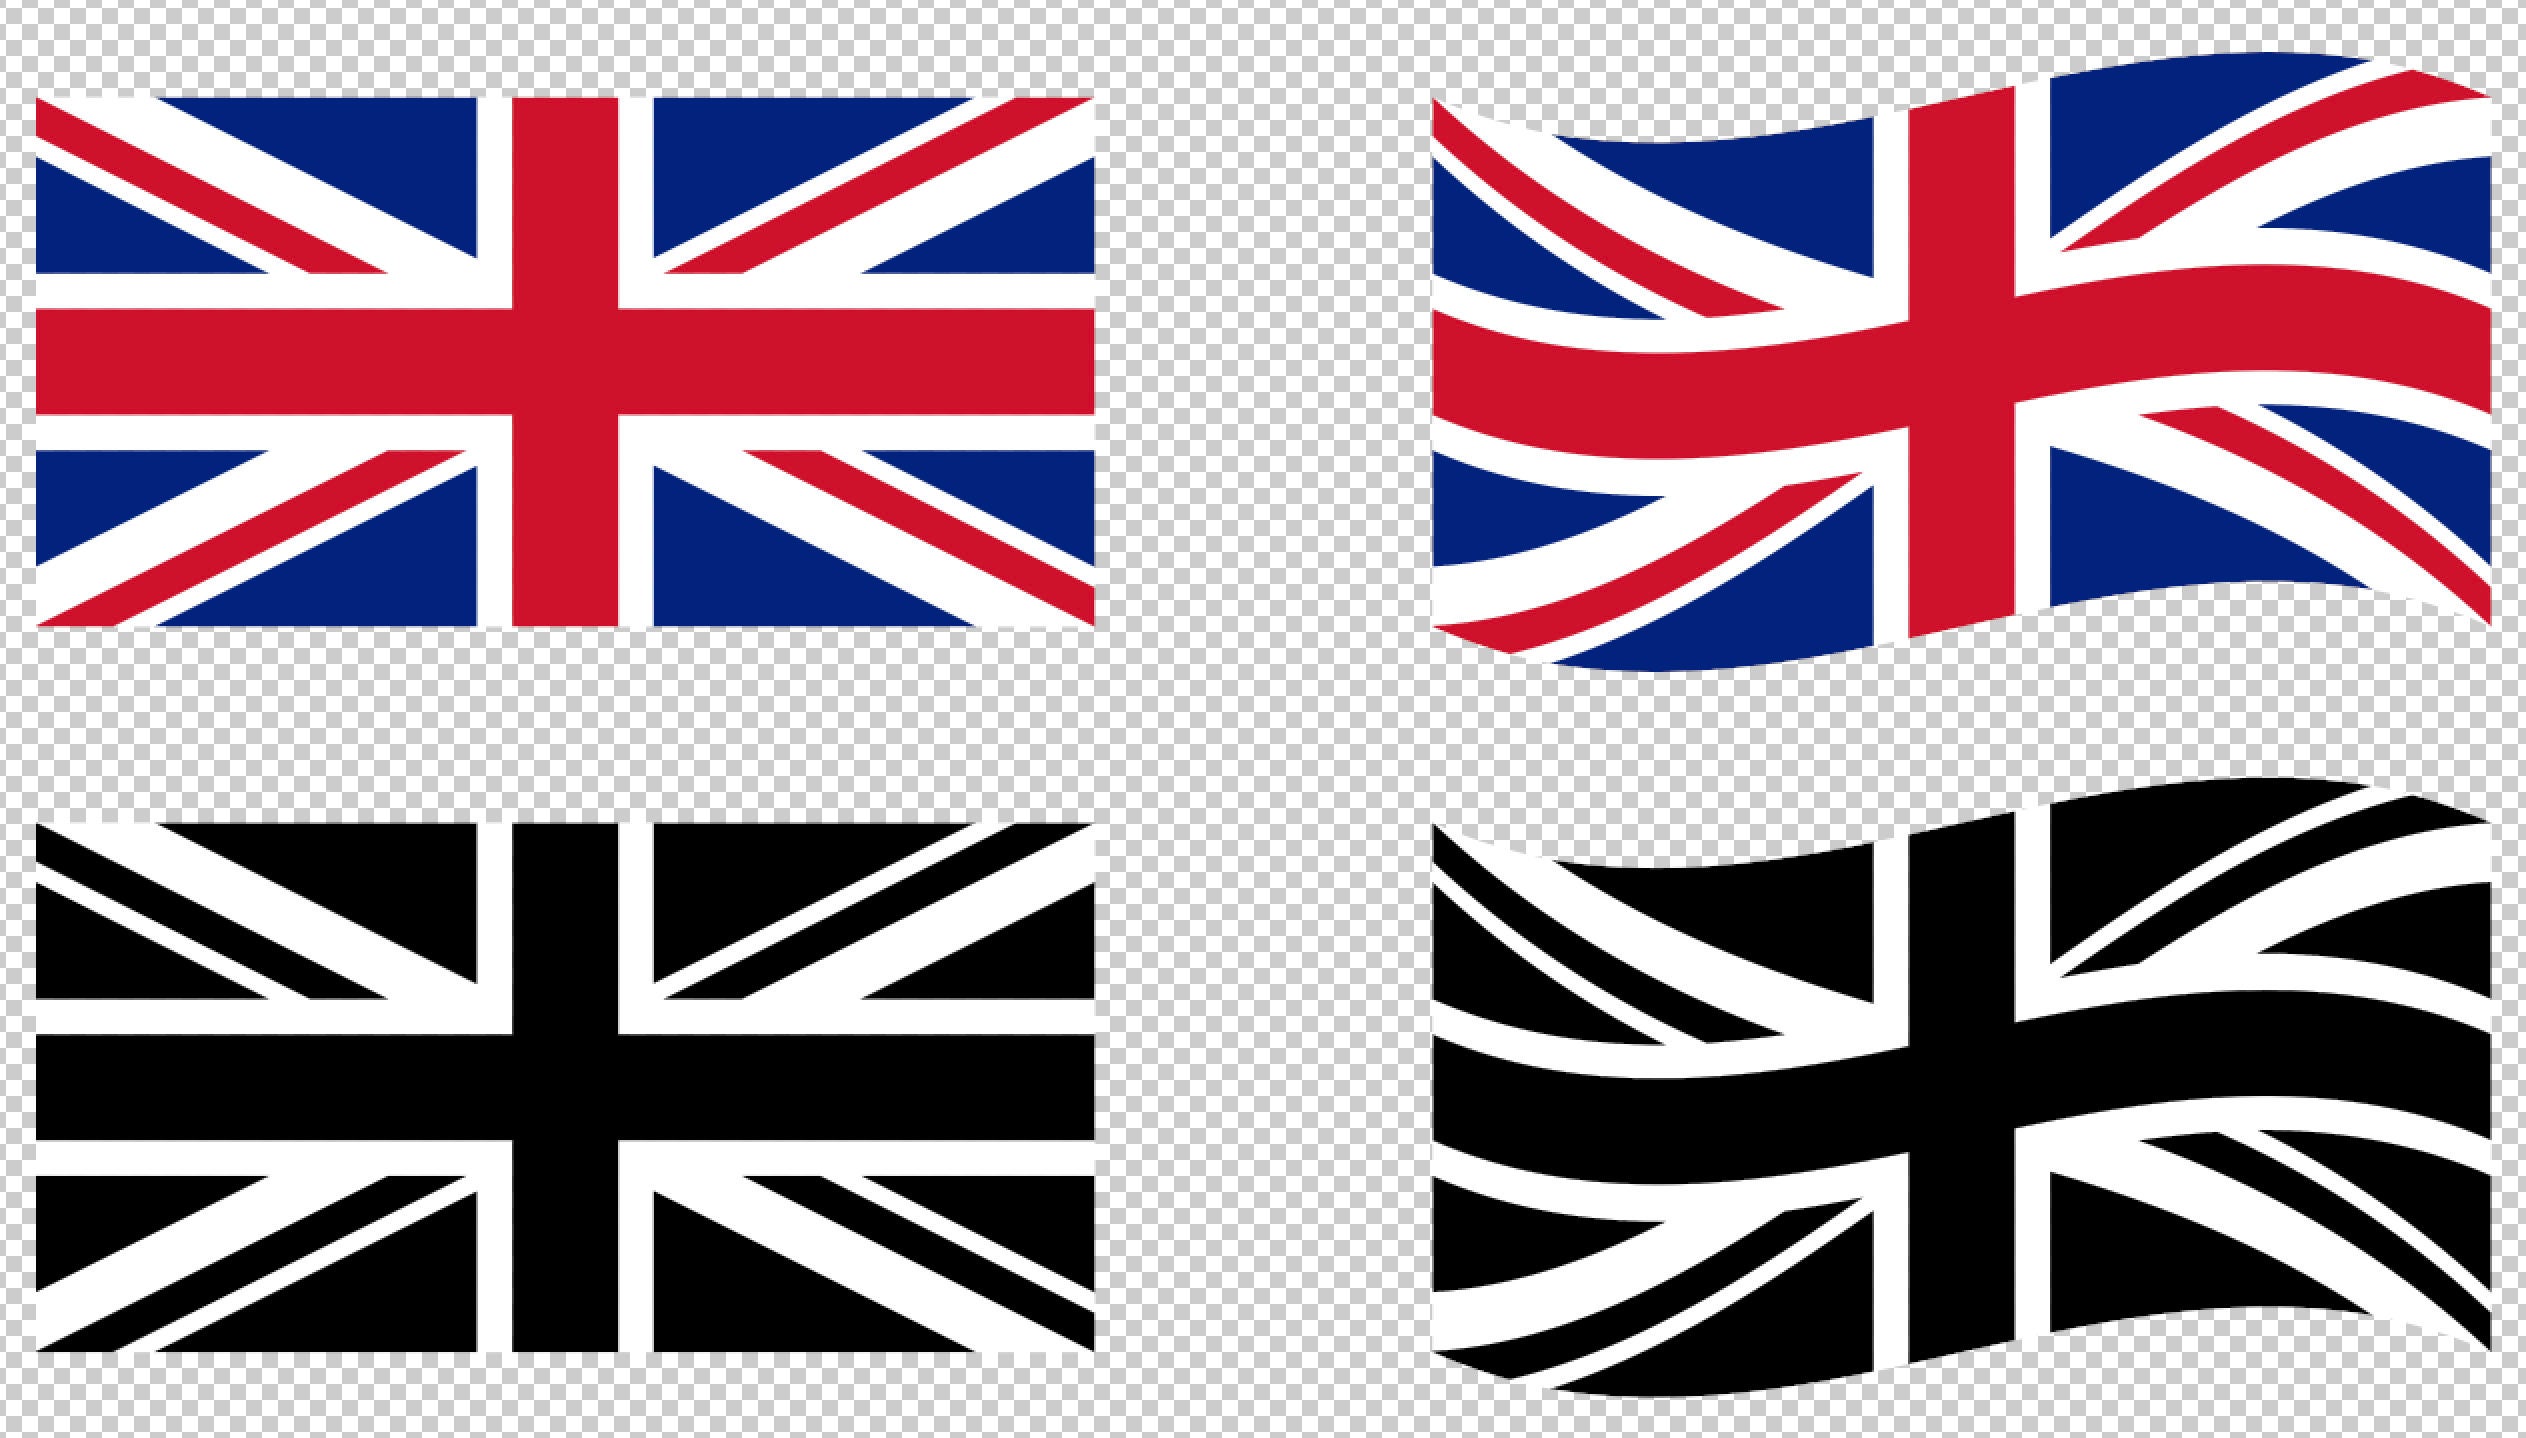 Download United Kingdom Flag SVG Vector Clip Art - Cutting Files ...